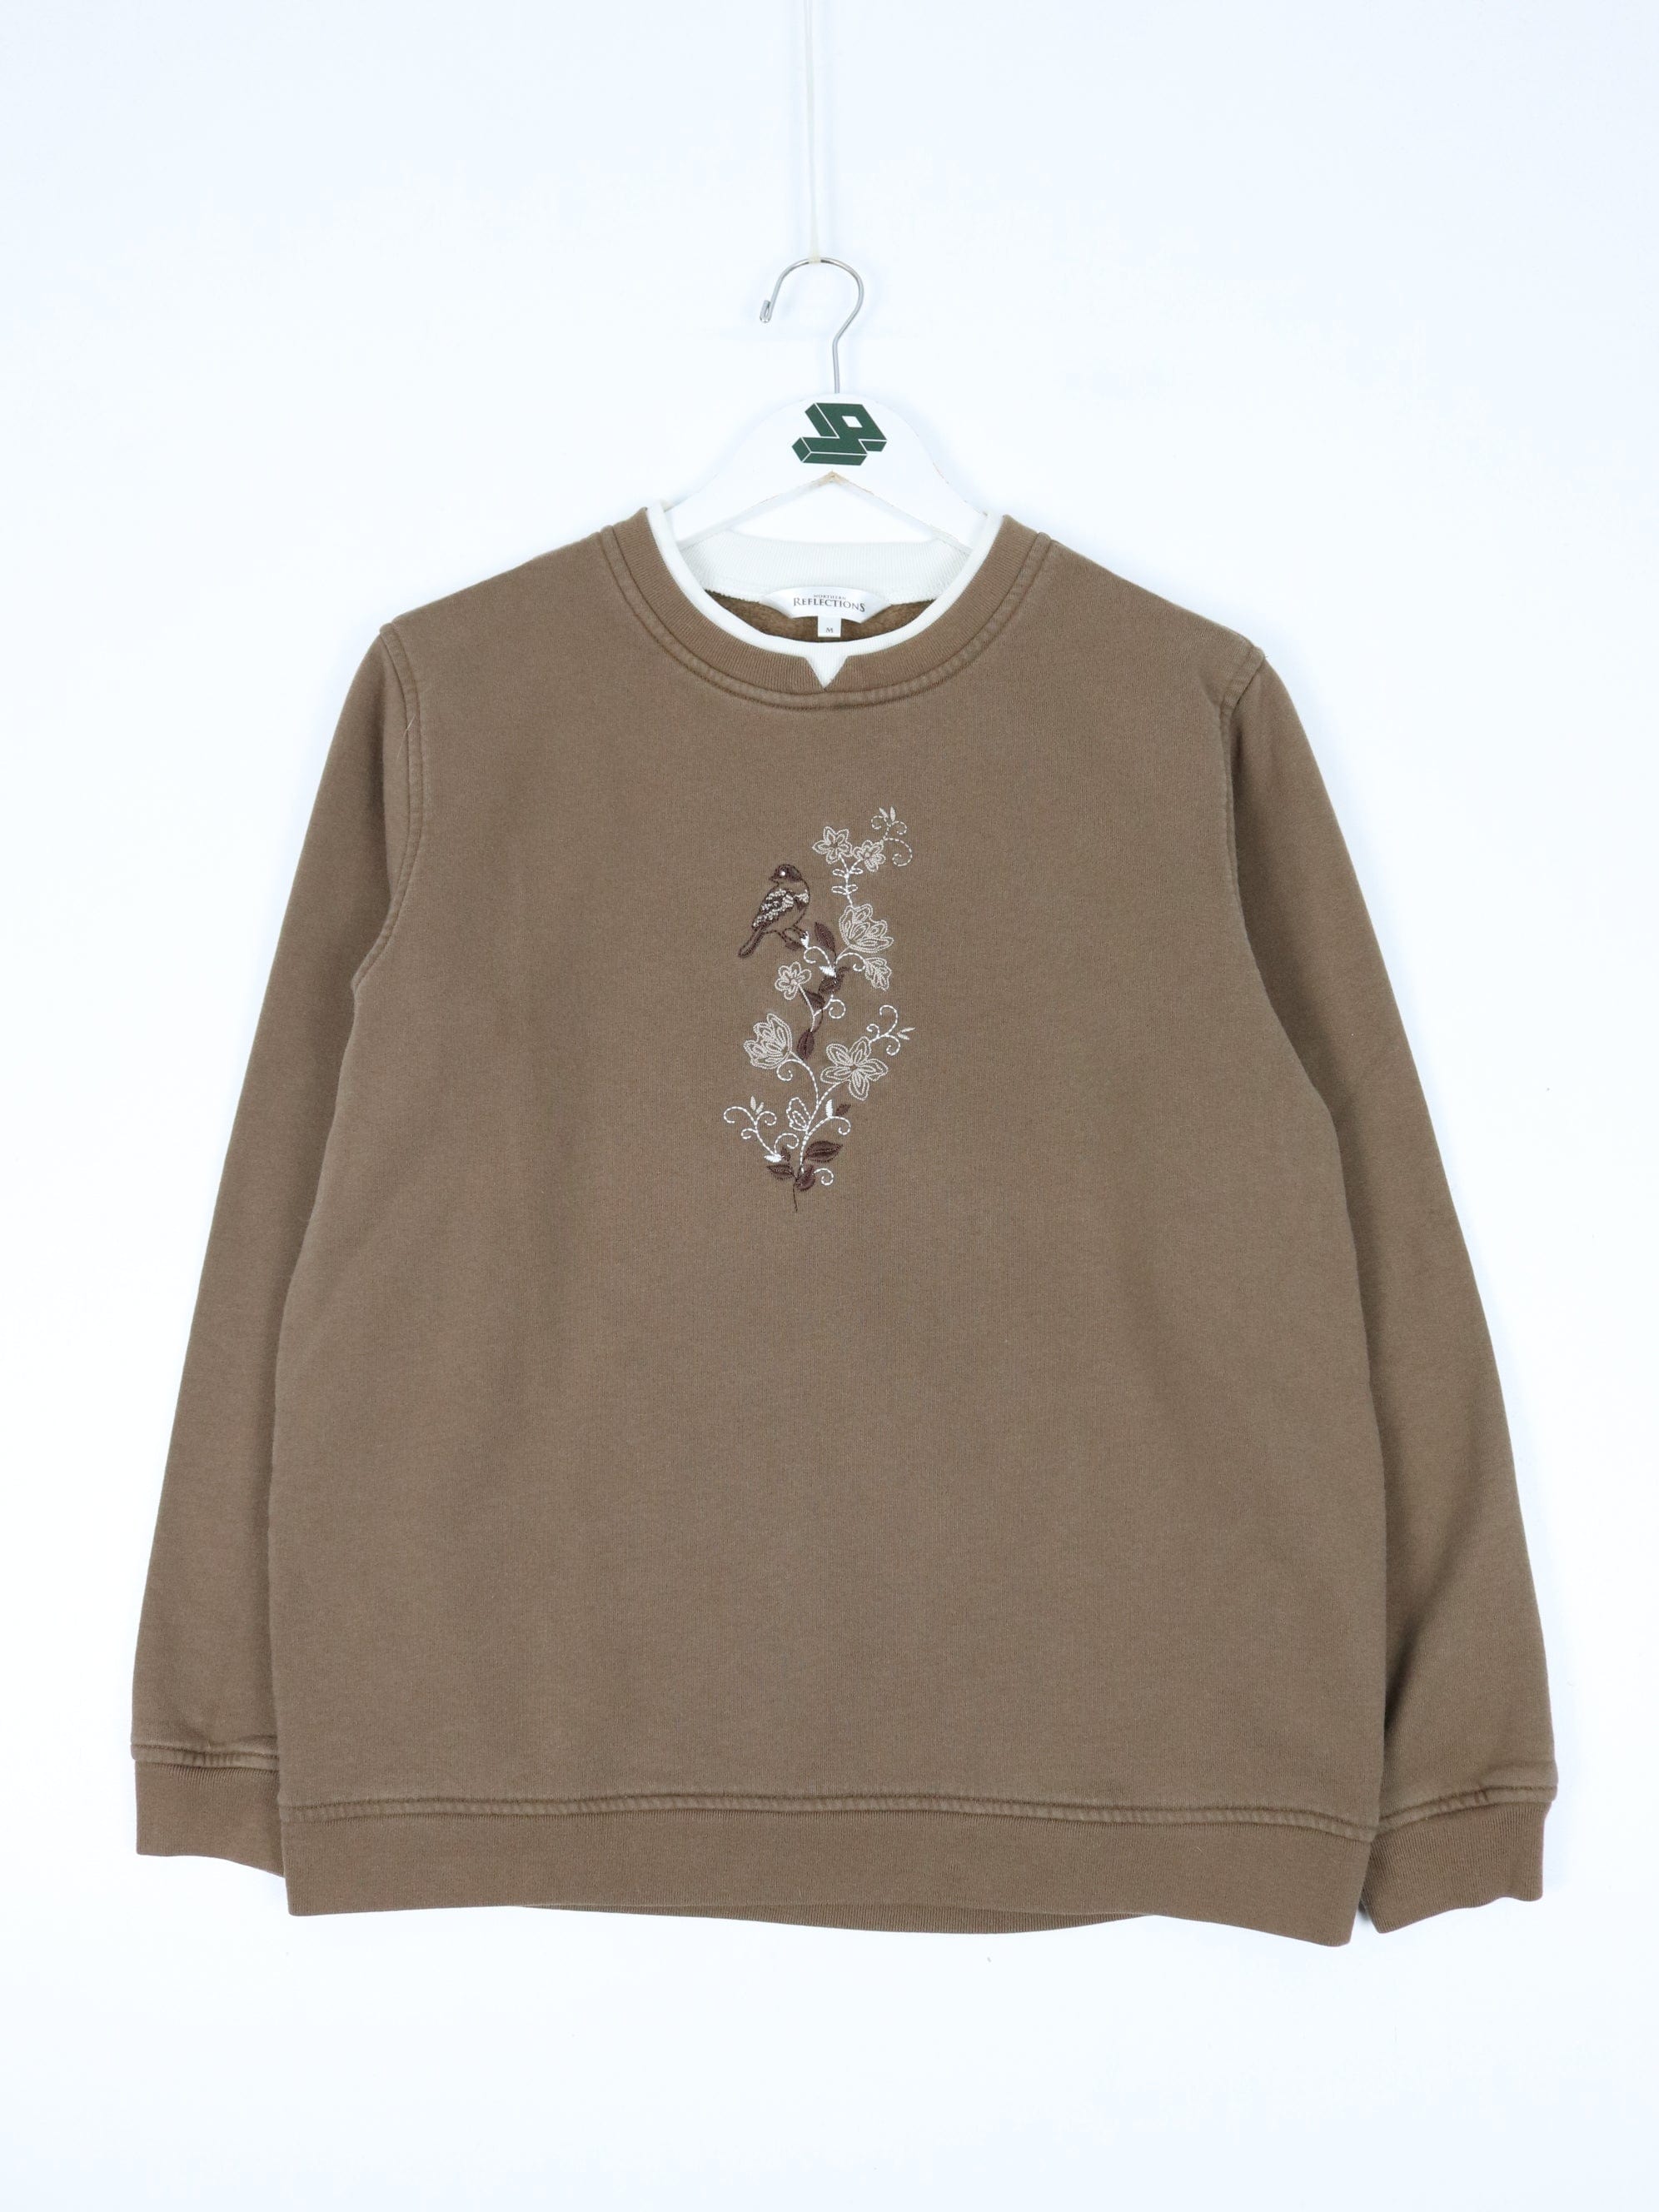 Northern Reflections Sweatshirt Womens Medium Brown Bird Floral Sweater